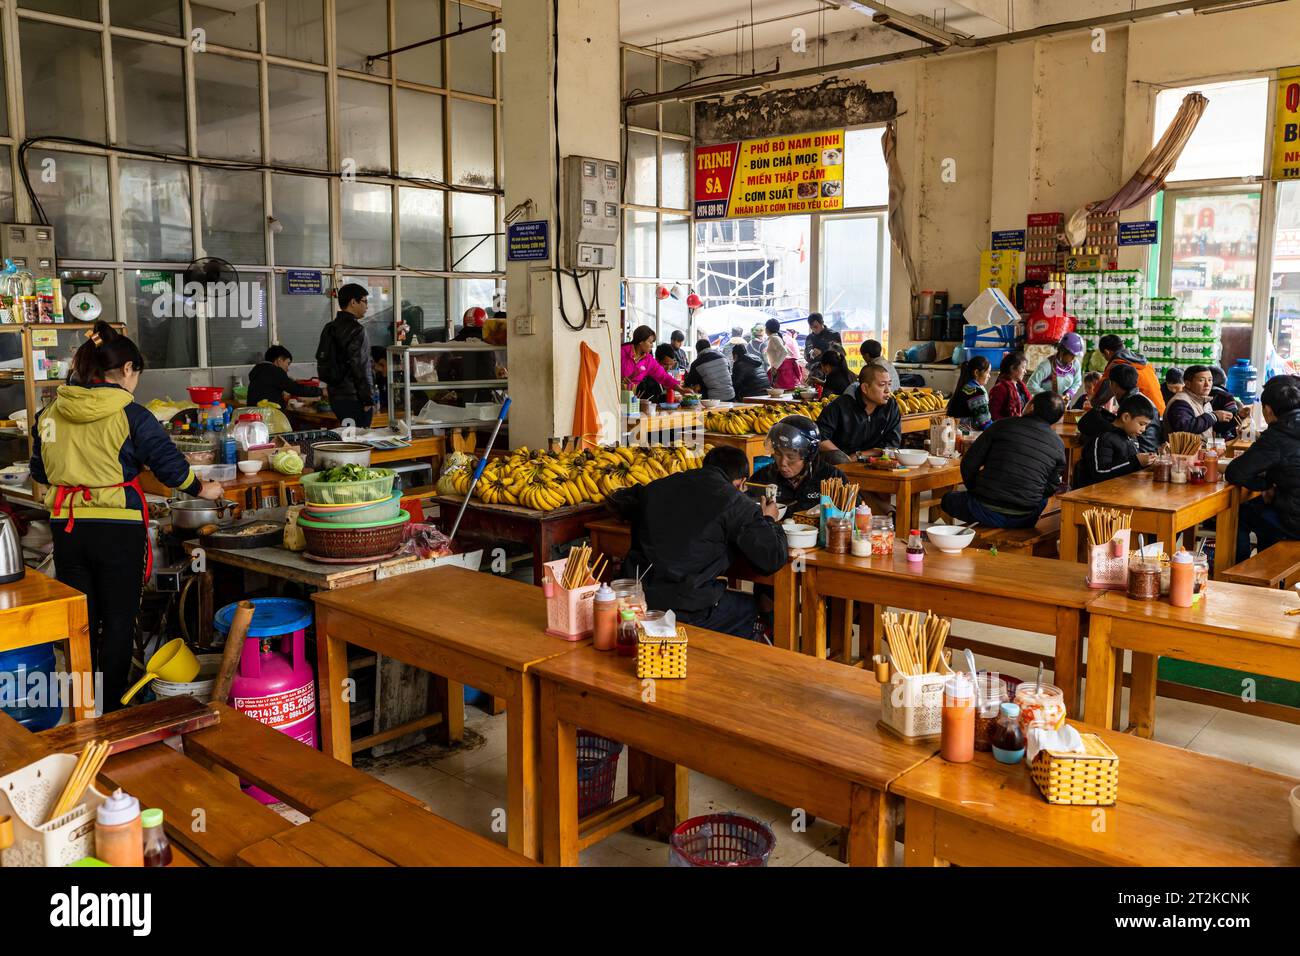 The Sapa Market in north of Vietnam Stock Photo